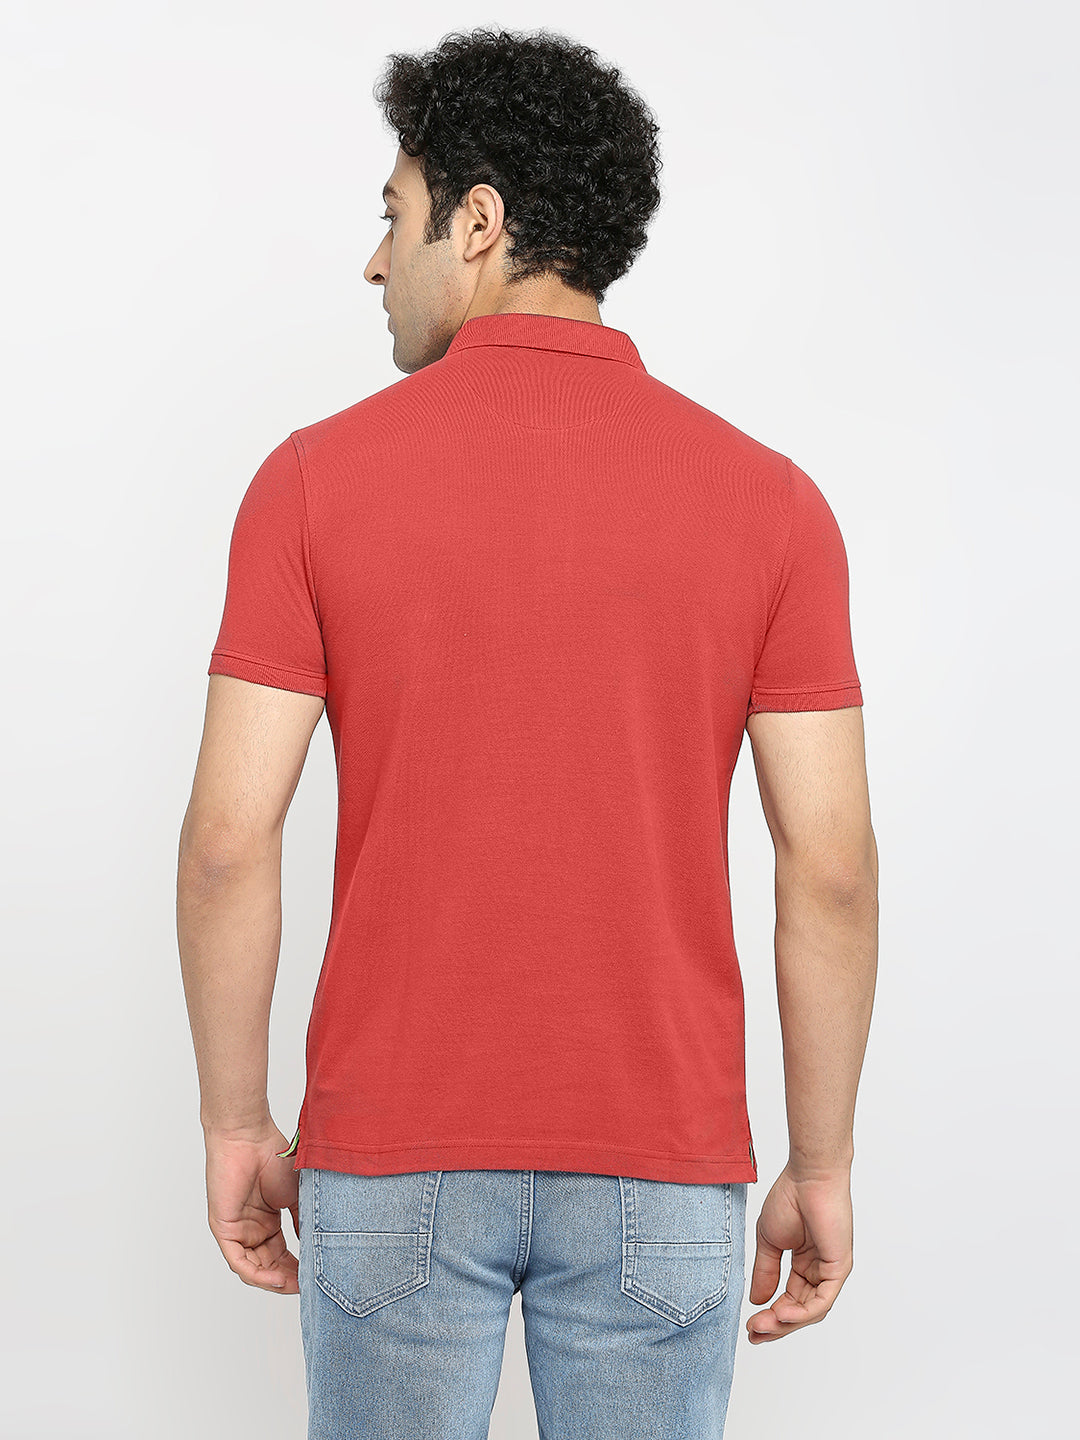 Men Premium Cotton Brick red Polo T-shirt- UnderJeans by Spykar